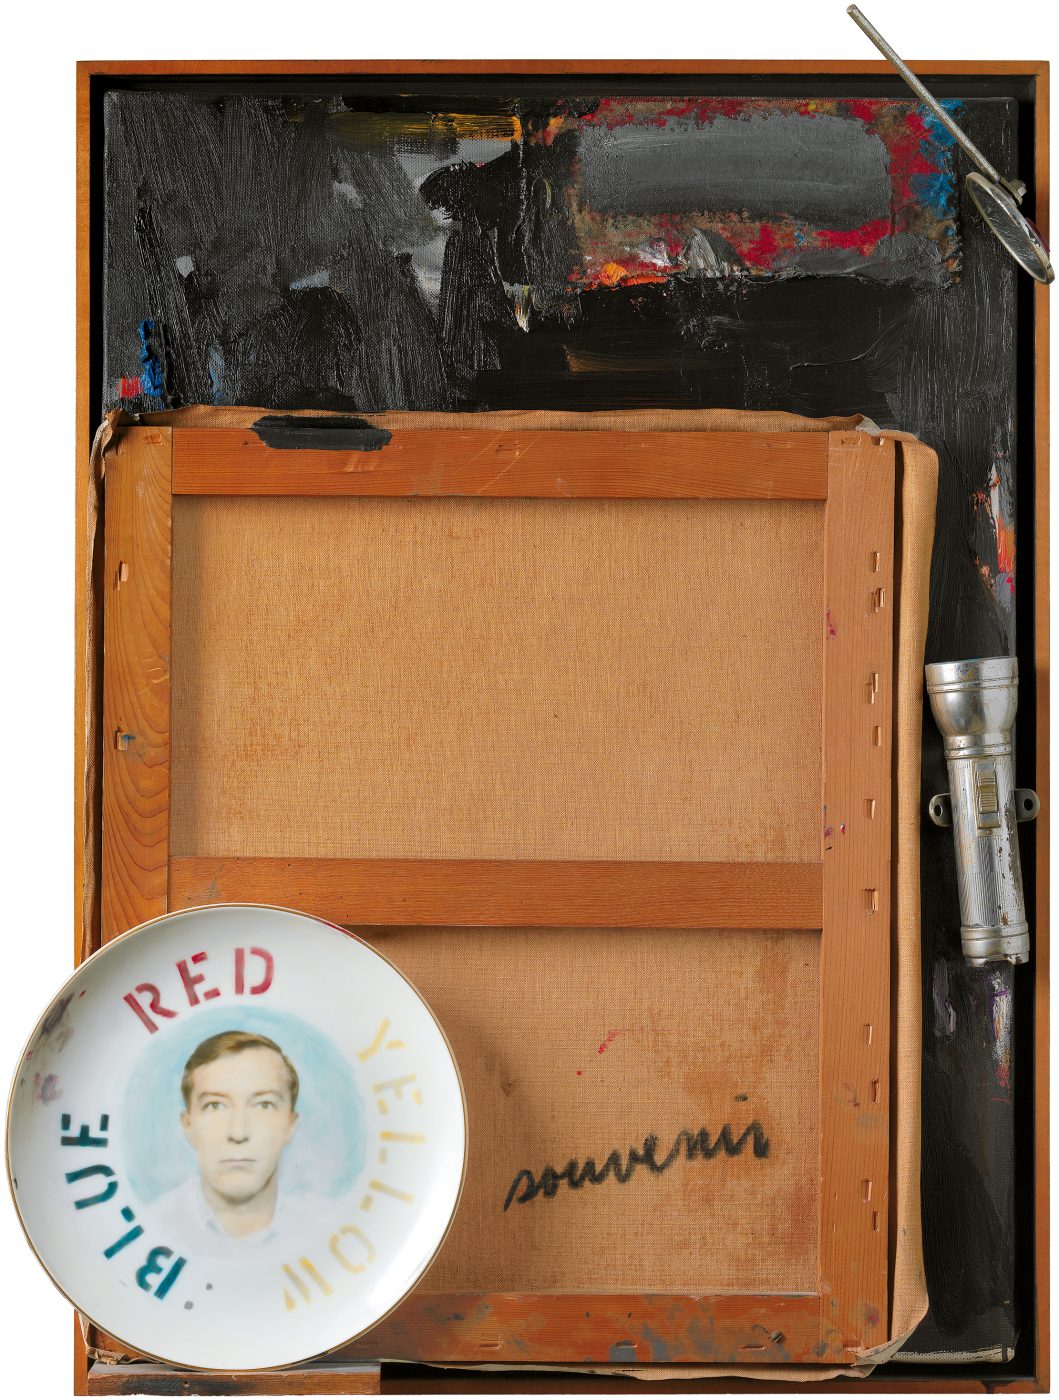 Jasper Johns: the assemblage Souvenir 2, 1964, contains a cheeky self-portrait on a plate